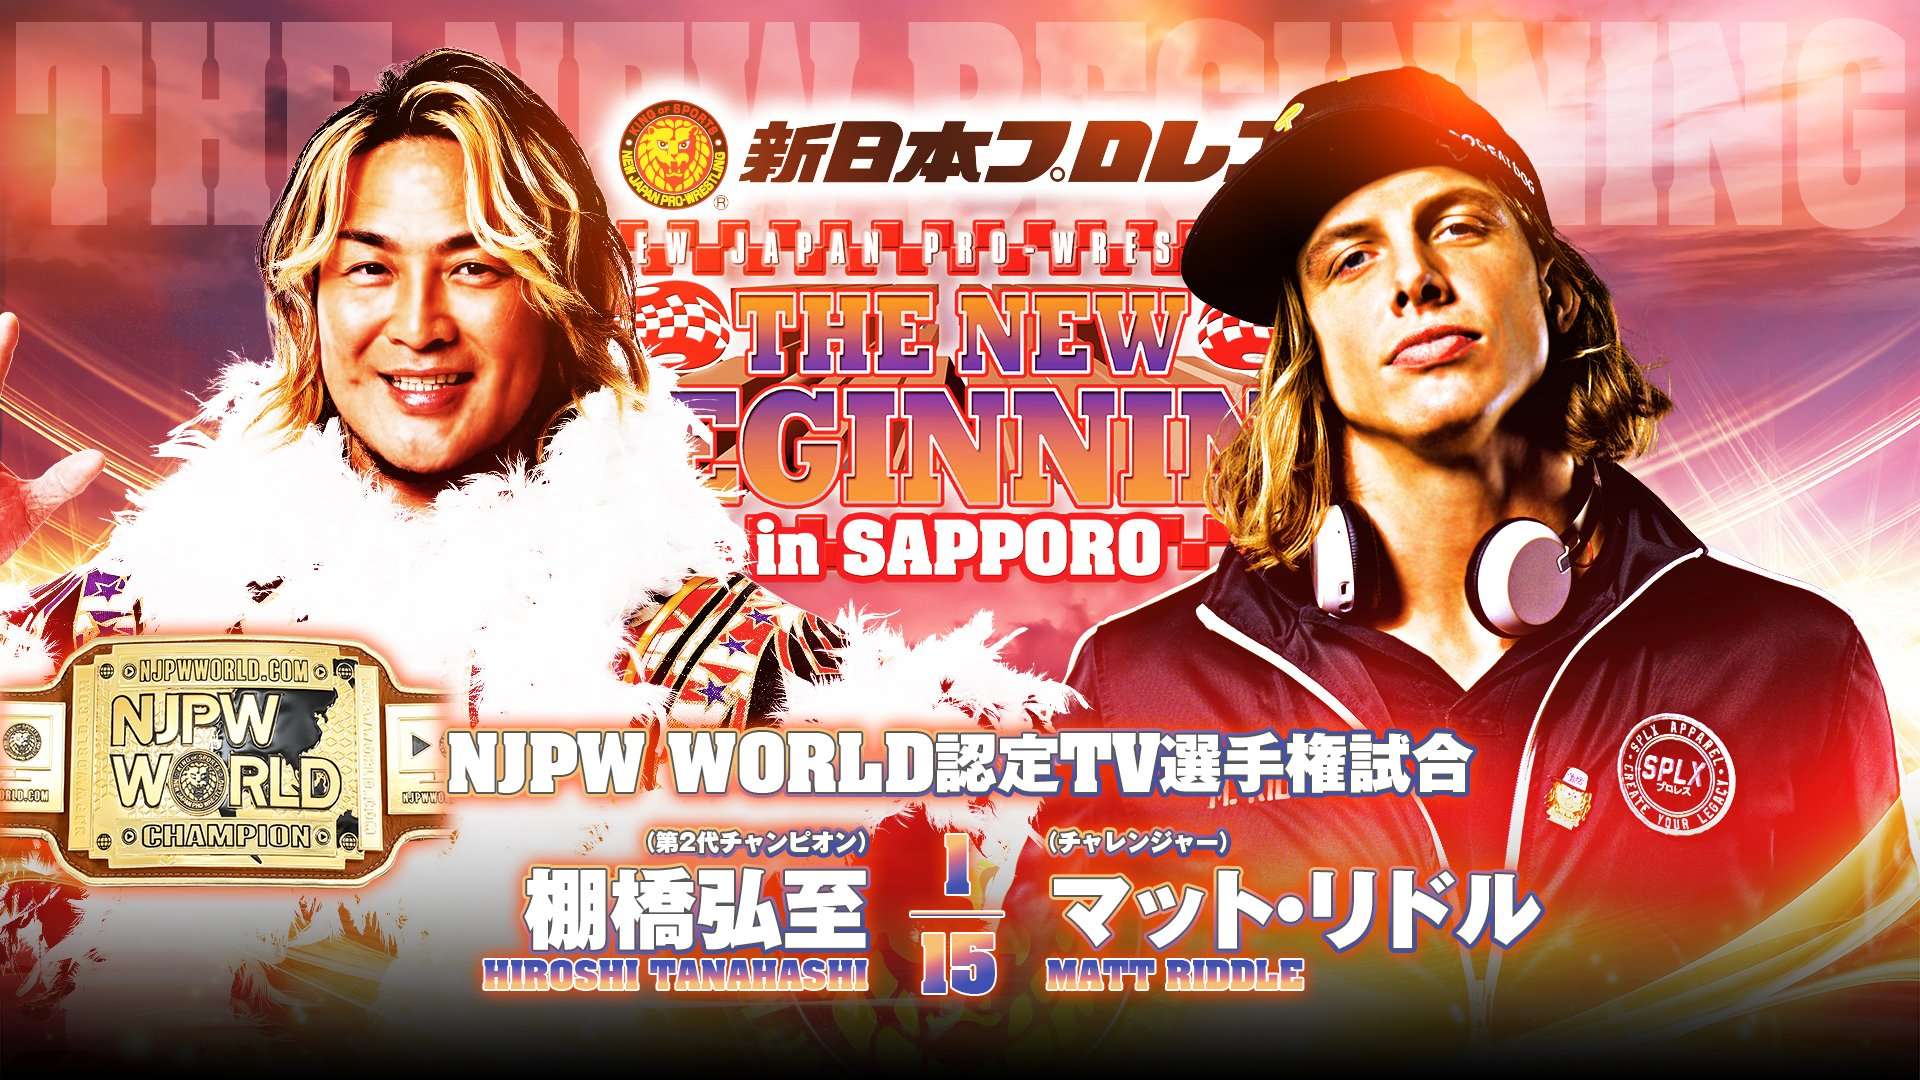 Matt Riddle derrota a Hiroshi Tanahashi en Sapporo